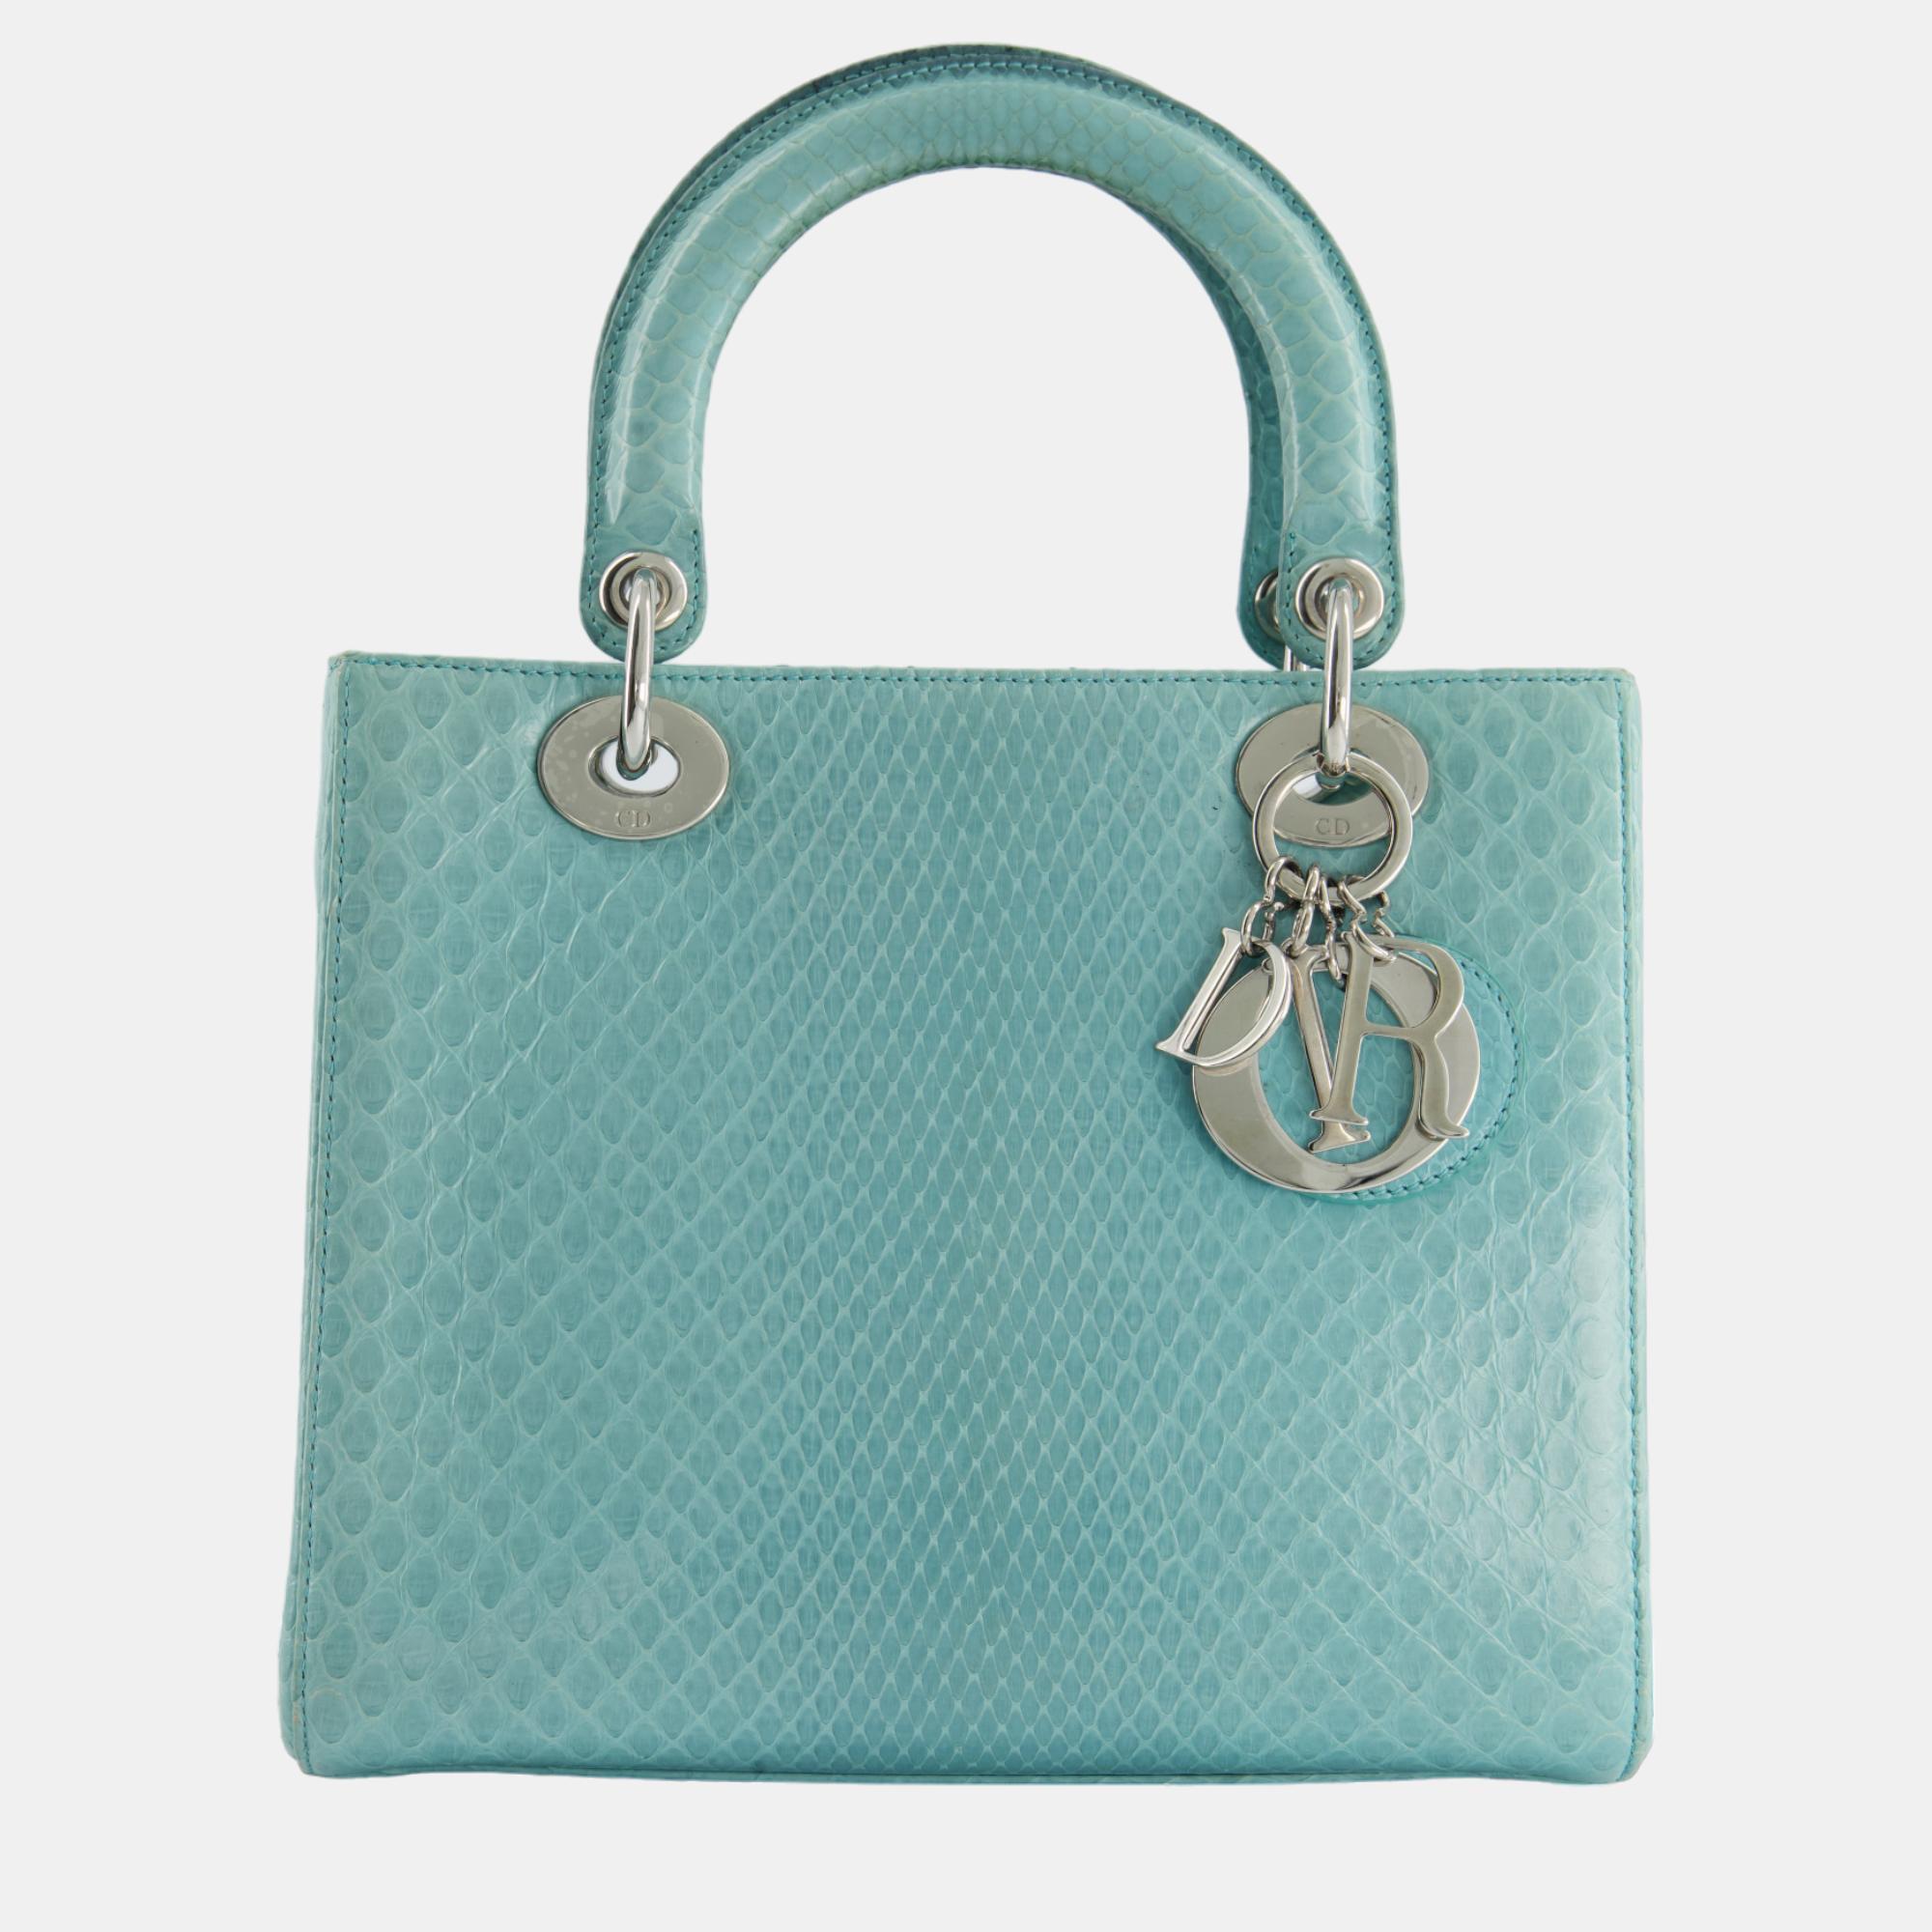 Christian Dior Medium Aqua Blue Python Lady Dior Bag with Silver Hardware